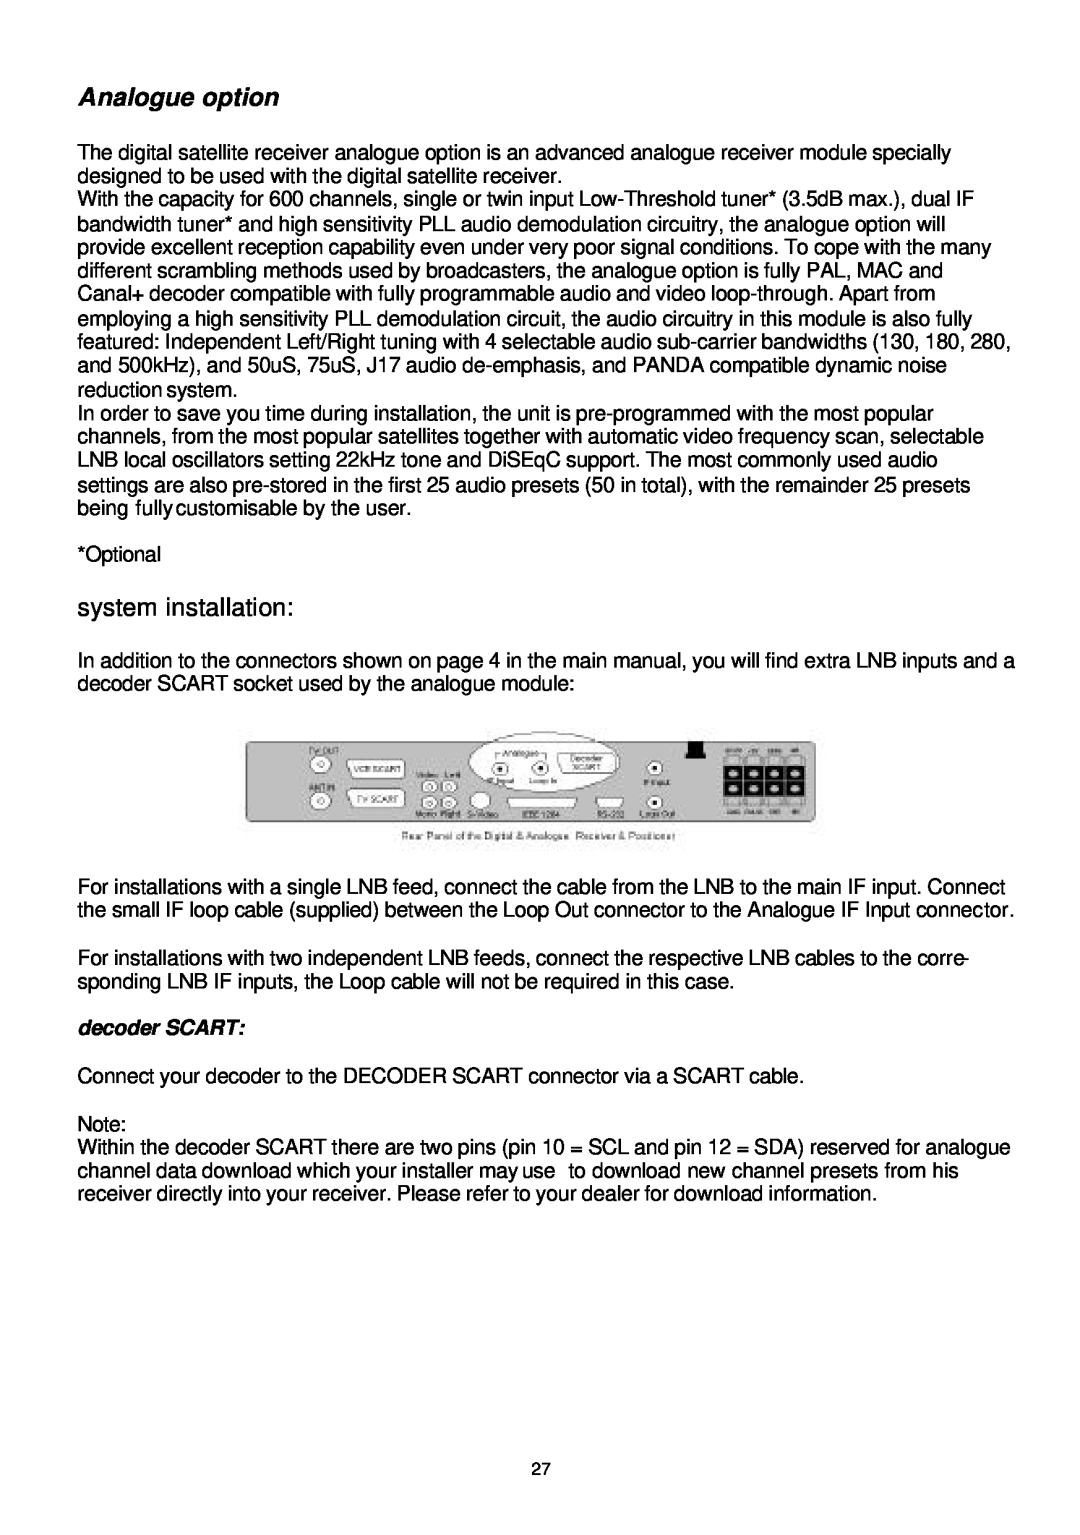 Samsung SADPCI-202 instruction manual Analogue option, system installation 